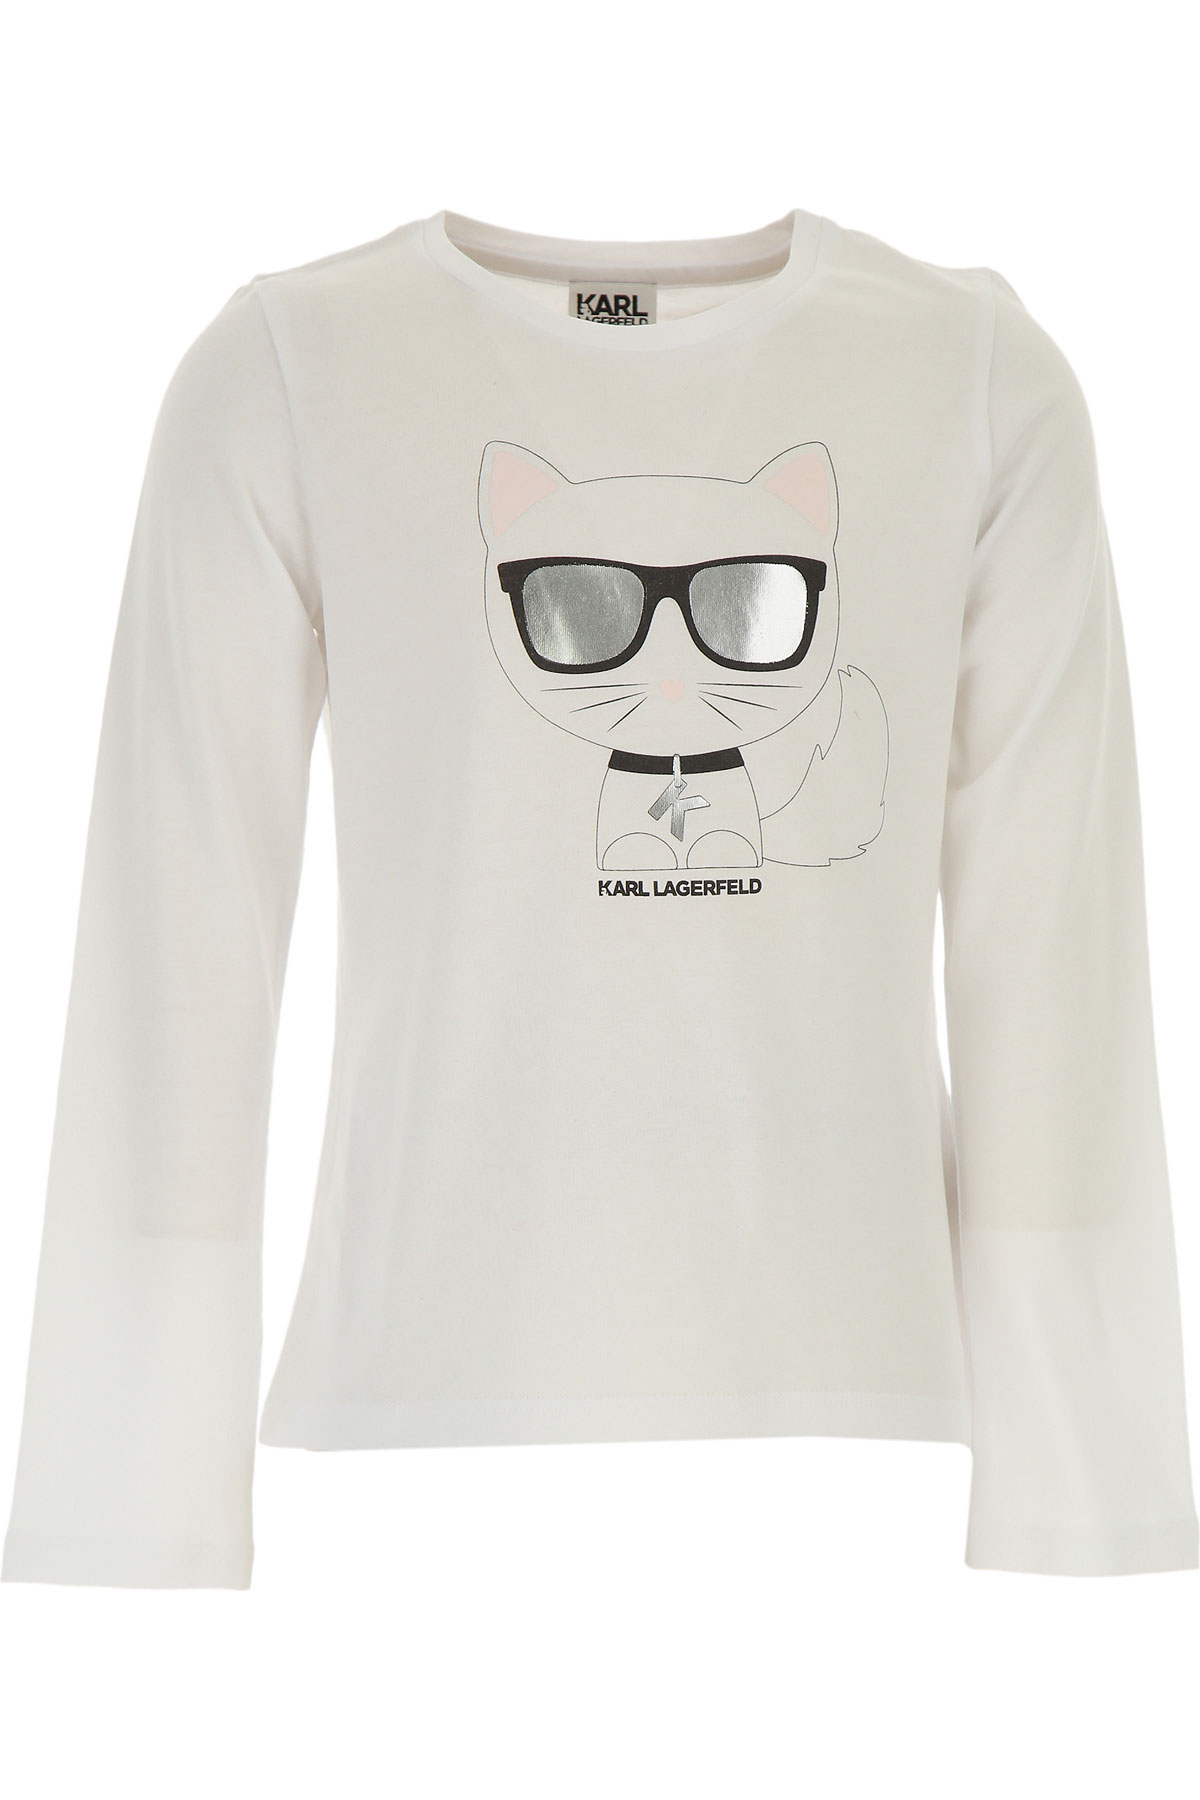 Karl Lagerfeld Kinder T-Shirt für Mädchen Günstig im Sale, Weiss, Terracotto-Fliesen, 2017, 10Y 12Y 14Y 3Y 4Y 5Y 8Y